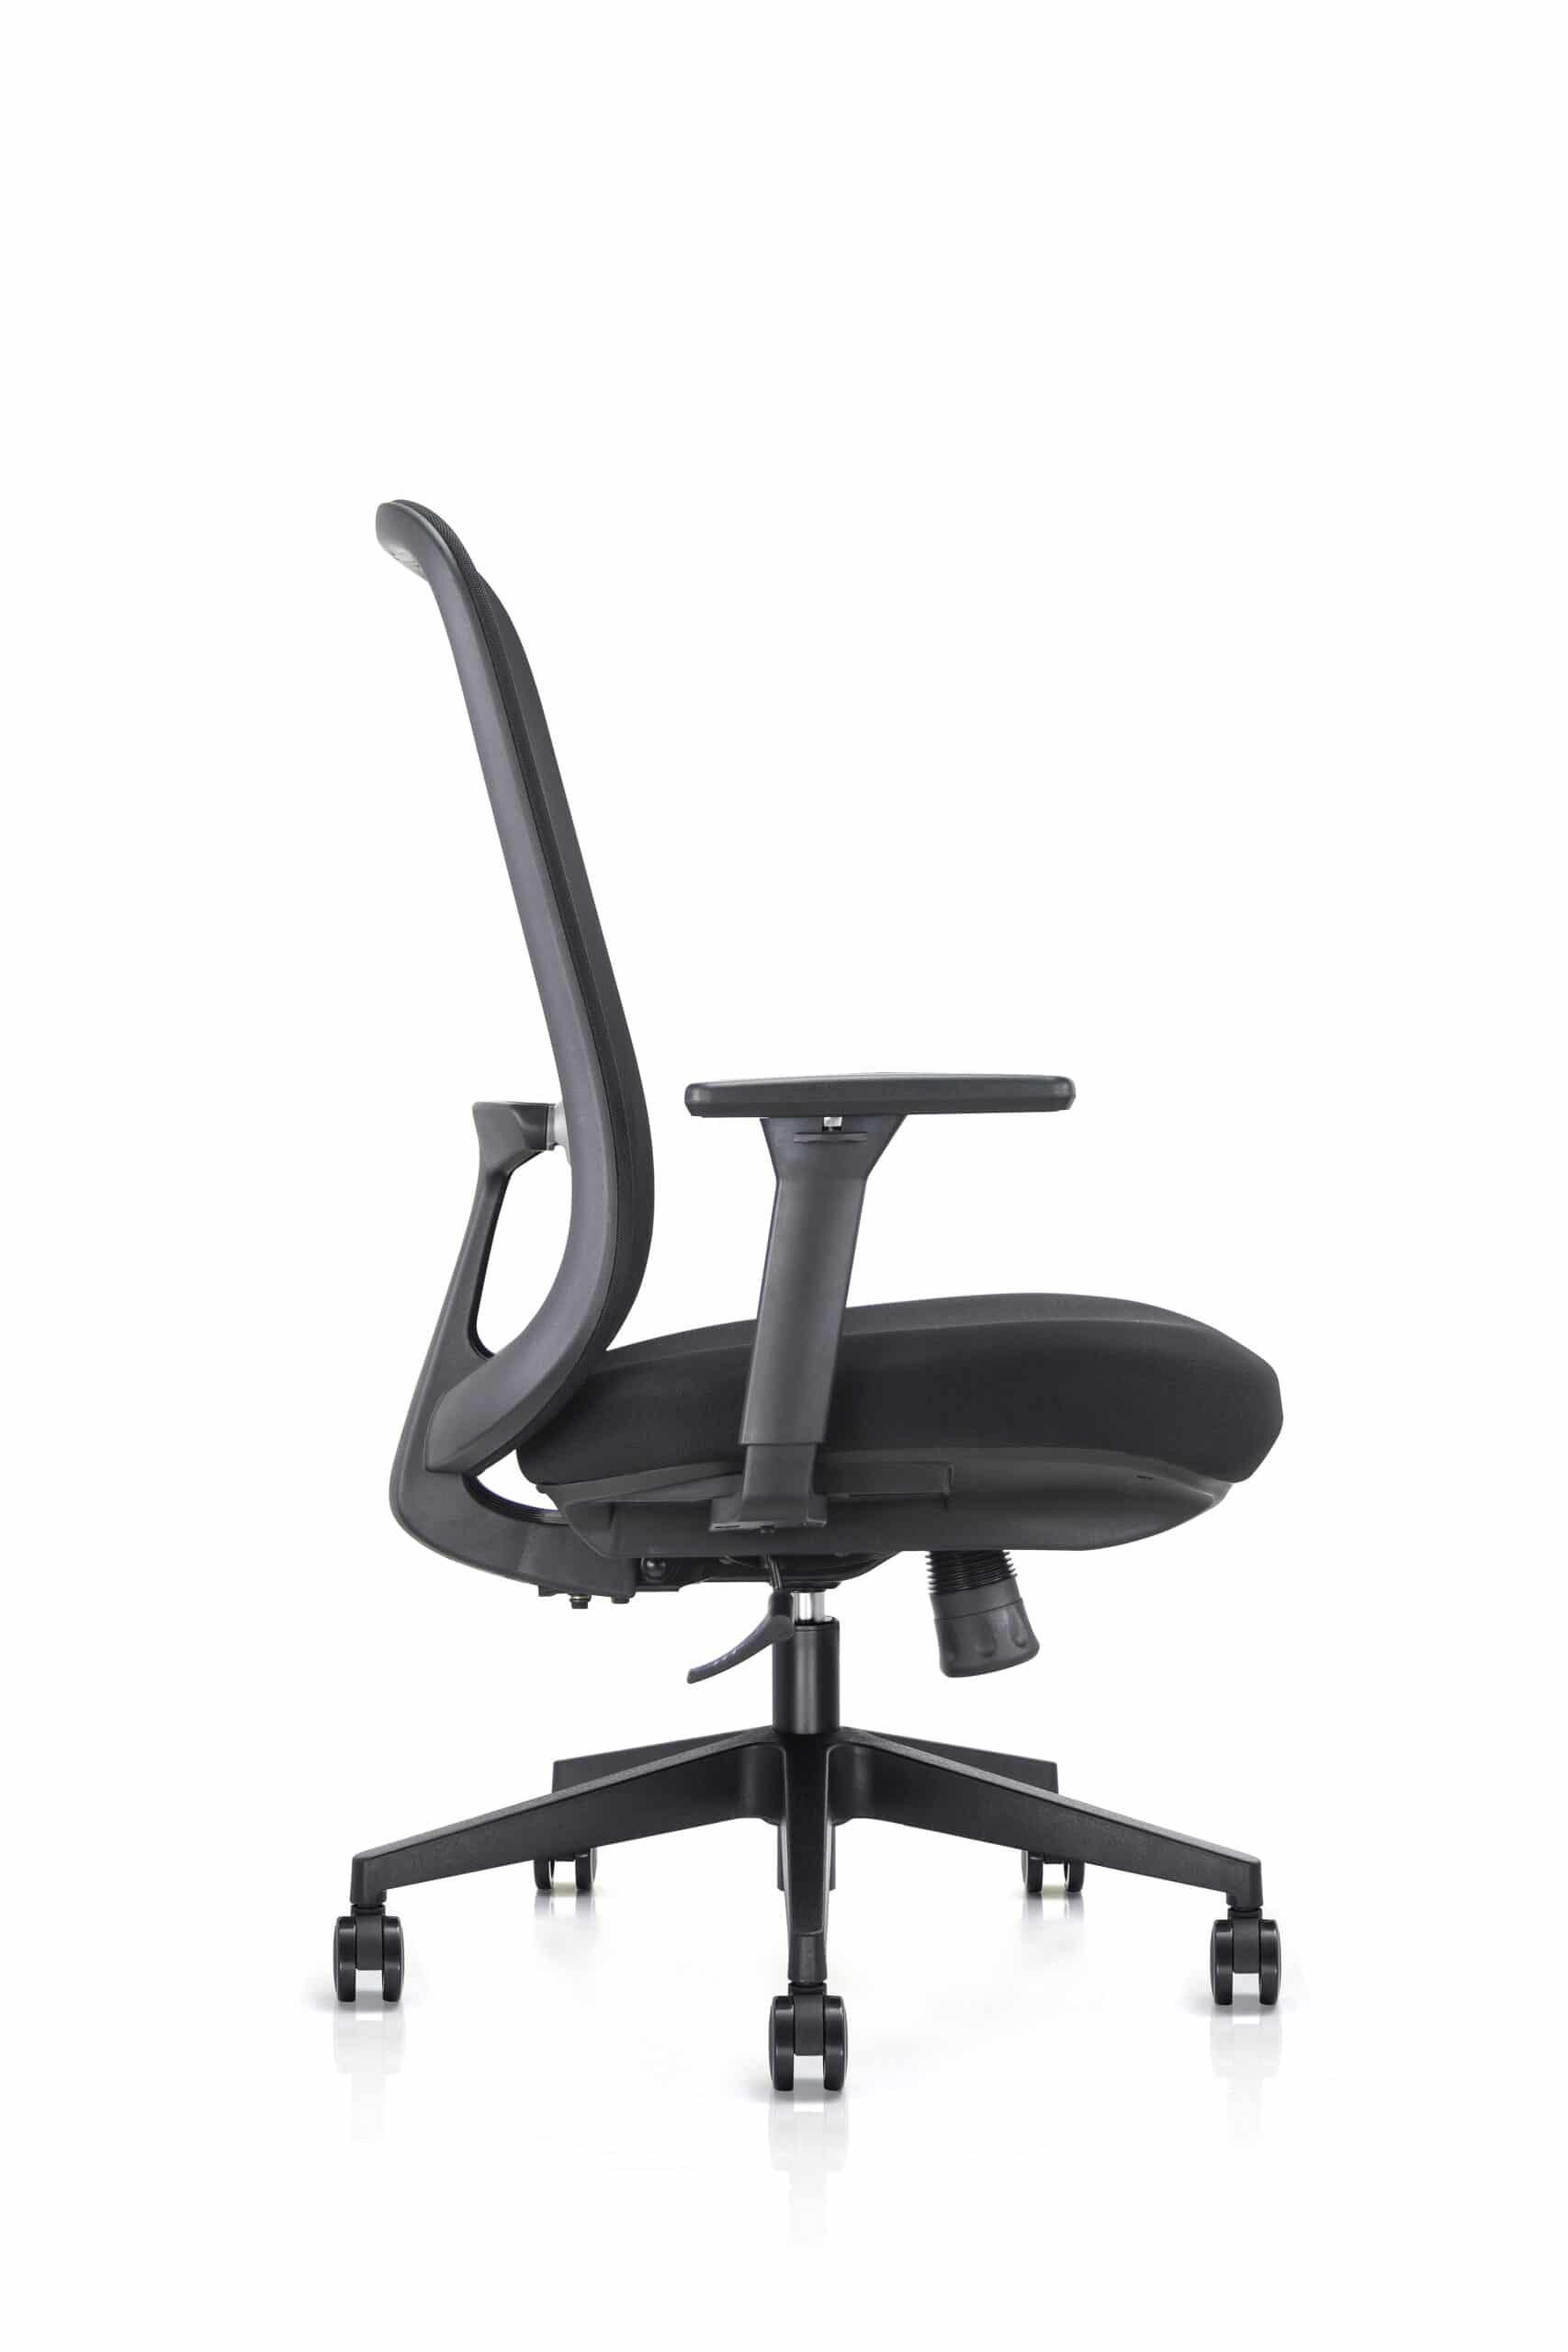 VX3 Task chair (side)